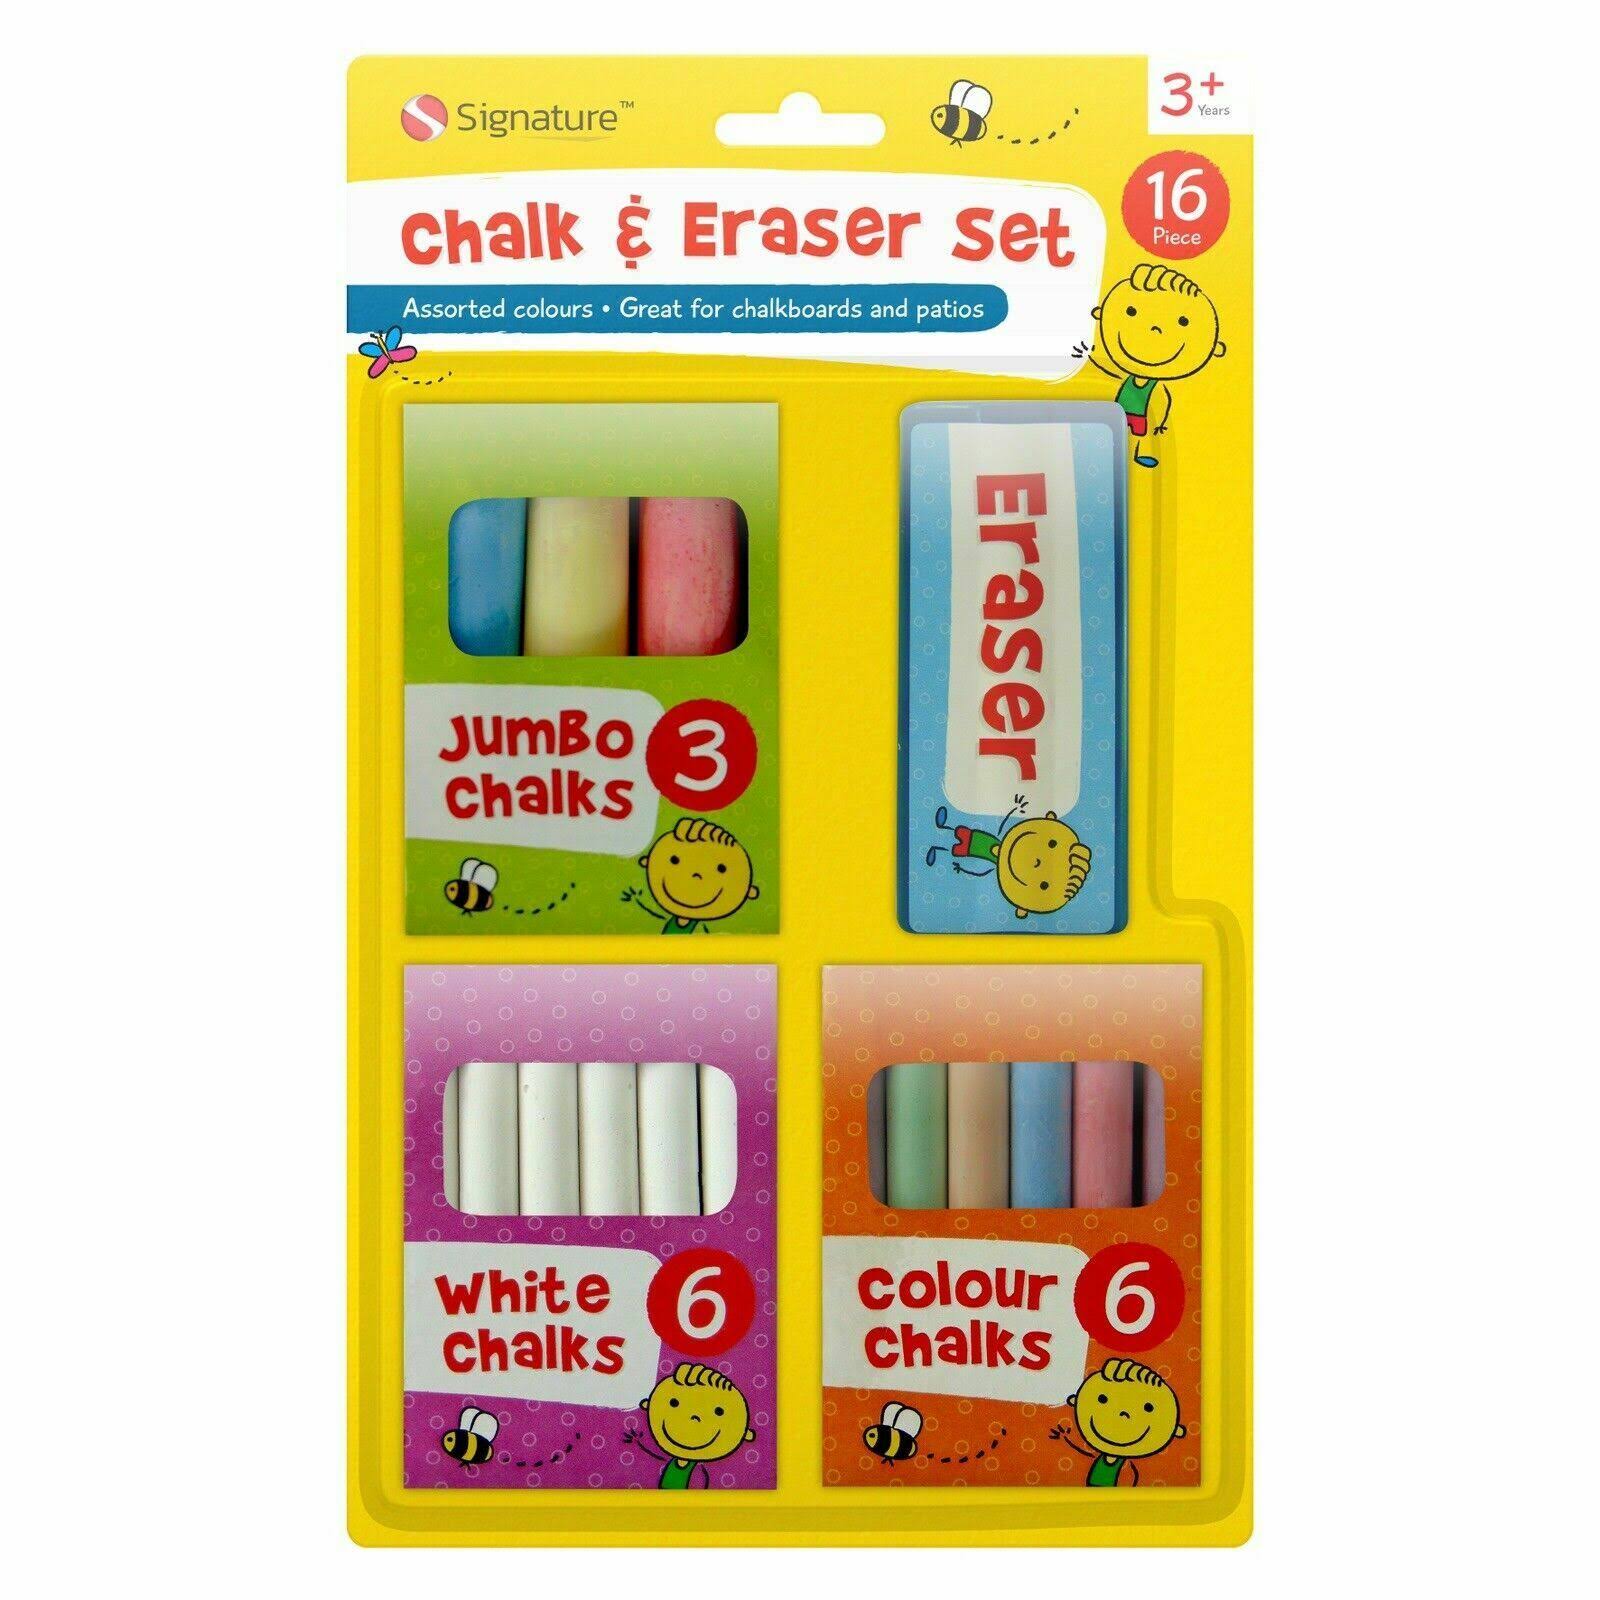 Signature Chalk & Eraser Set 16 Pack